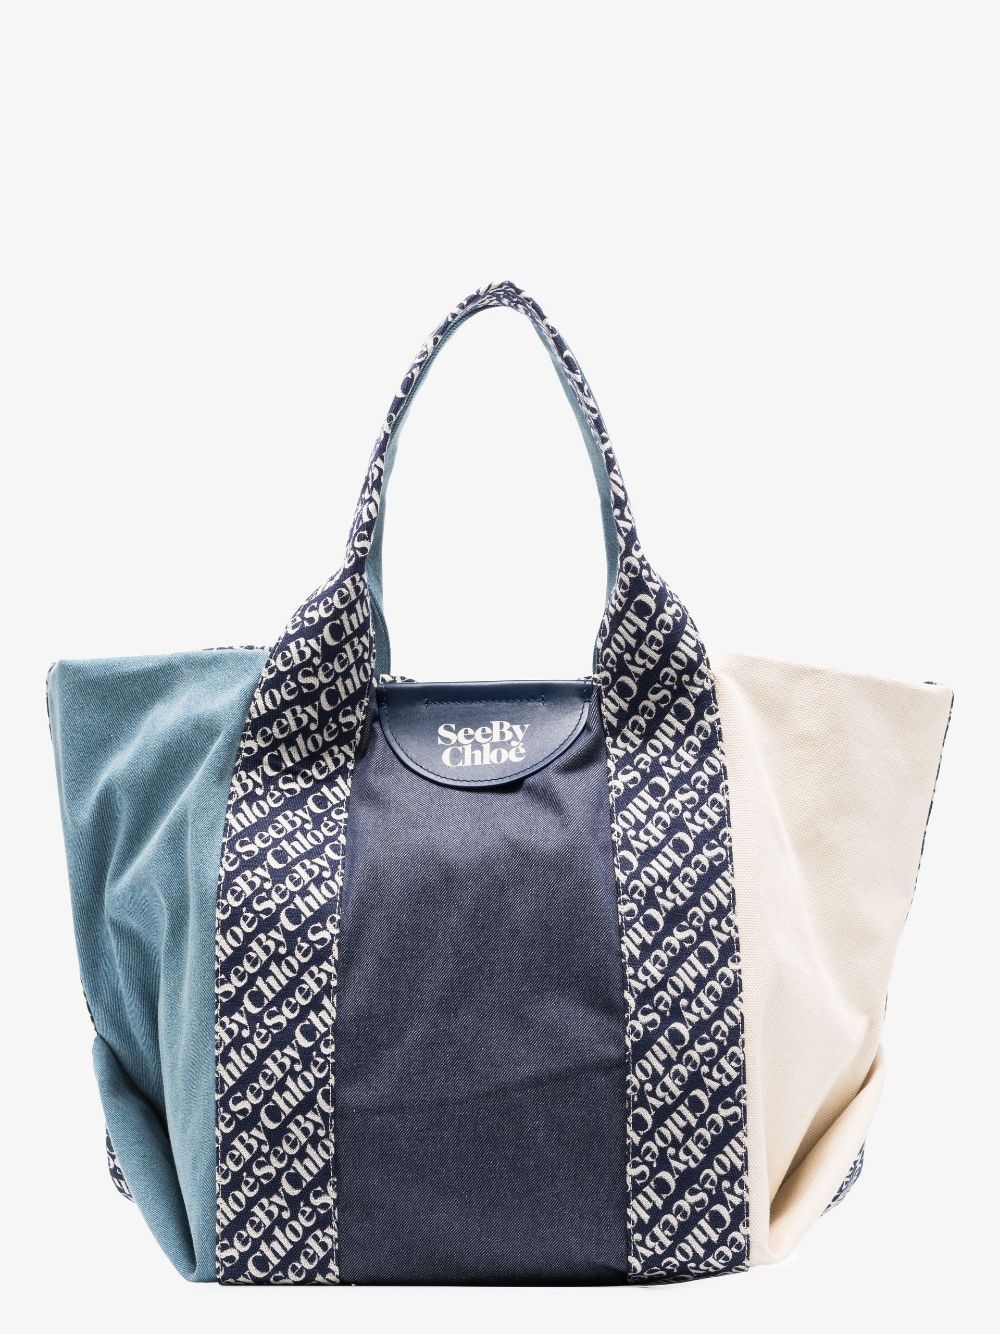 Light blue/navy blue cotton logo print tote bag